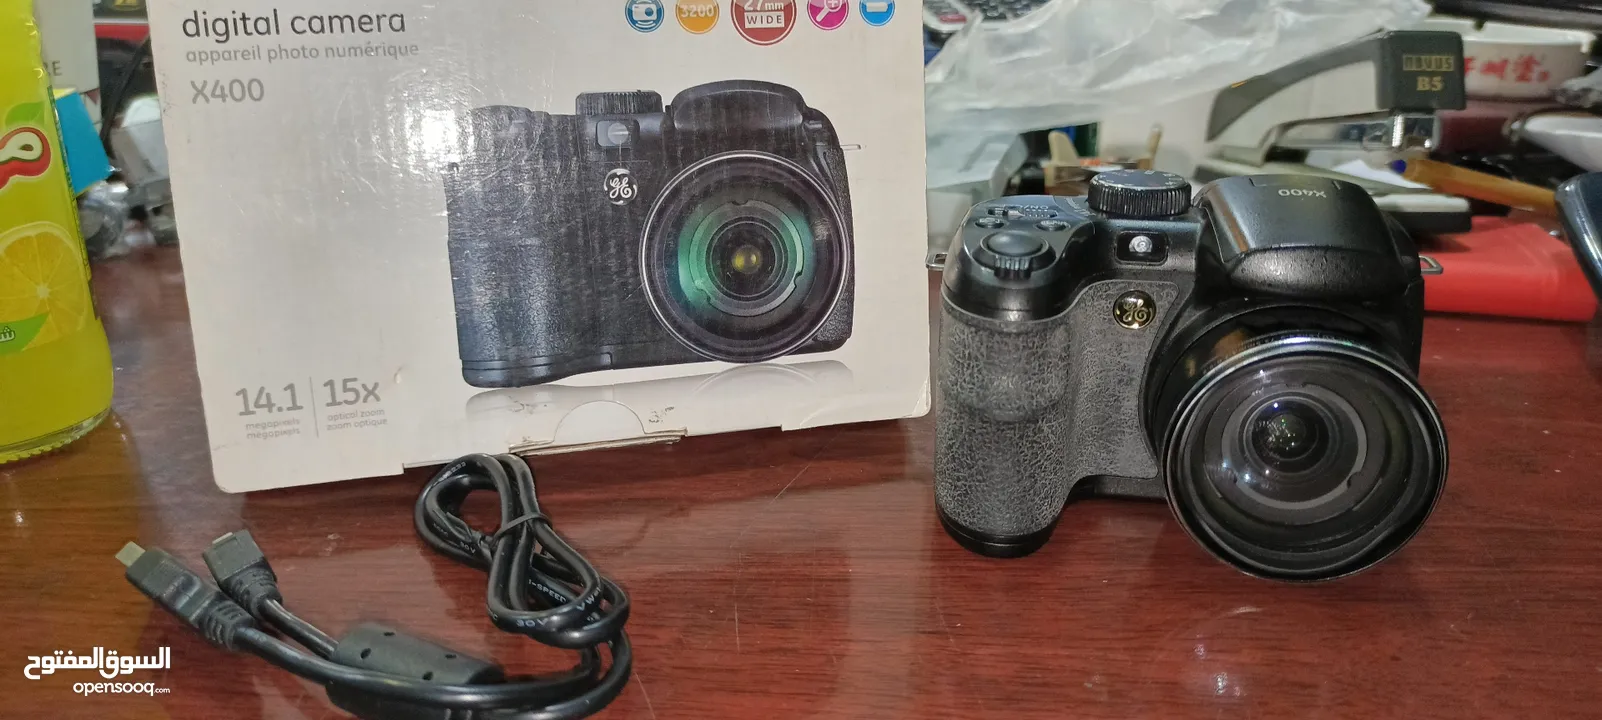 كاميرا نوع GE موديل X500 للبيع